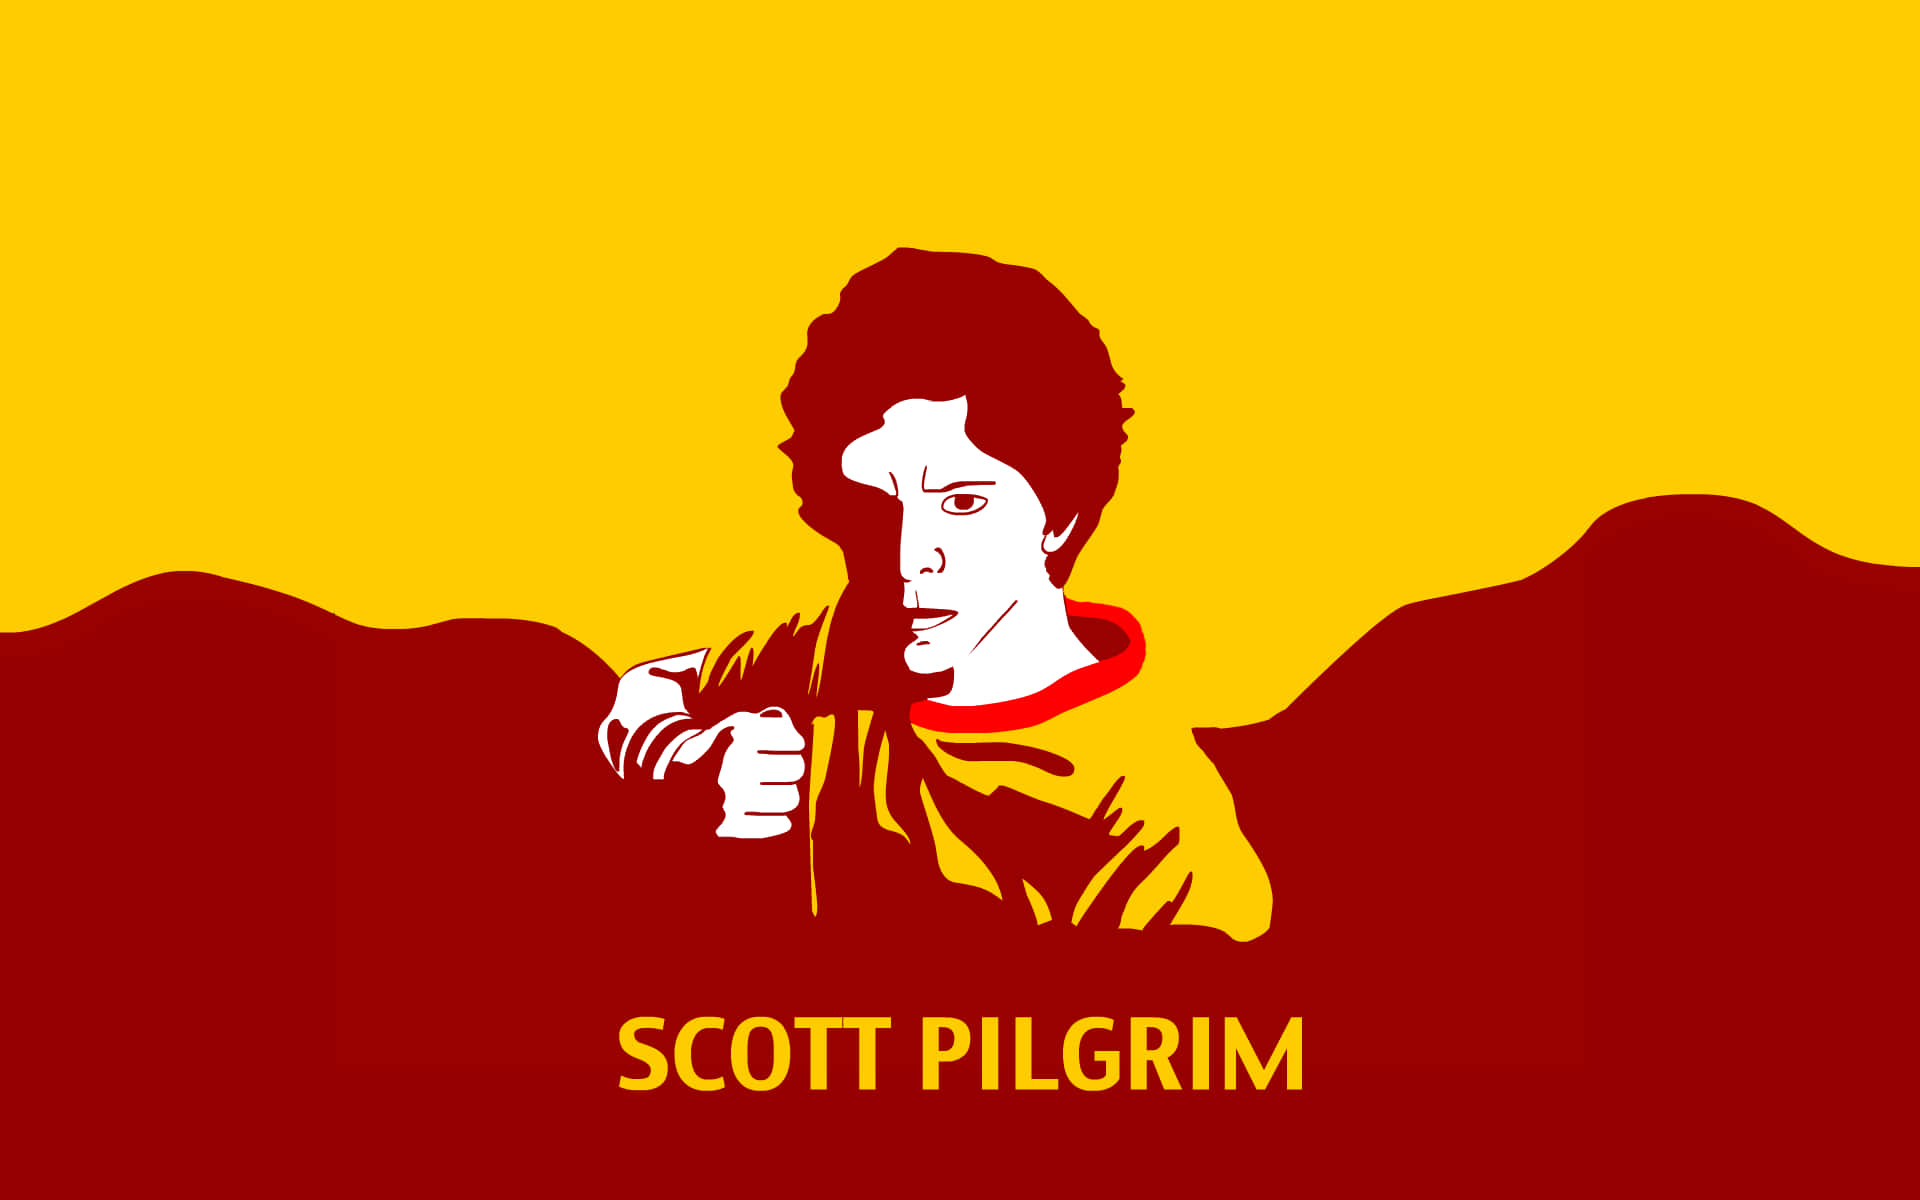 Scottpilgrim - Hintergrundbild. Wallpaper